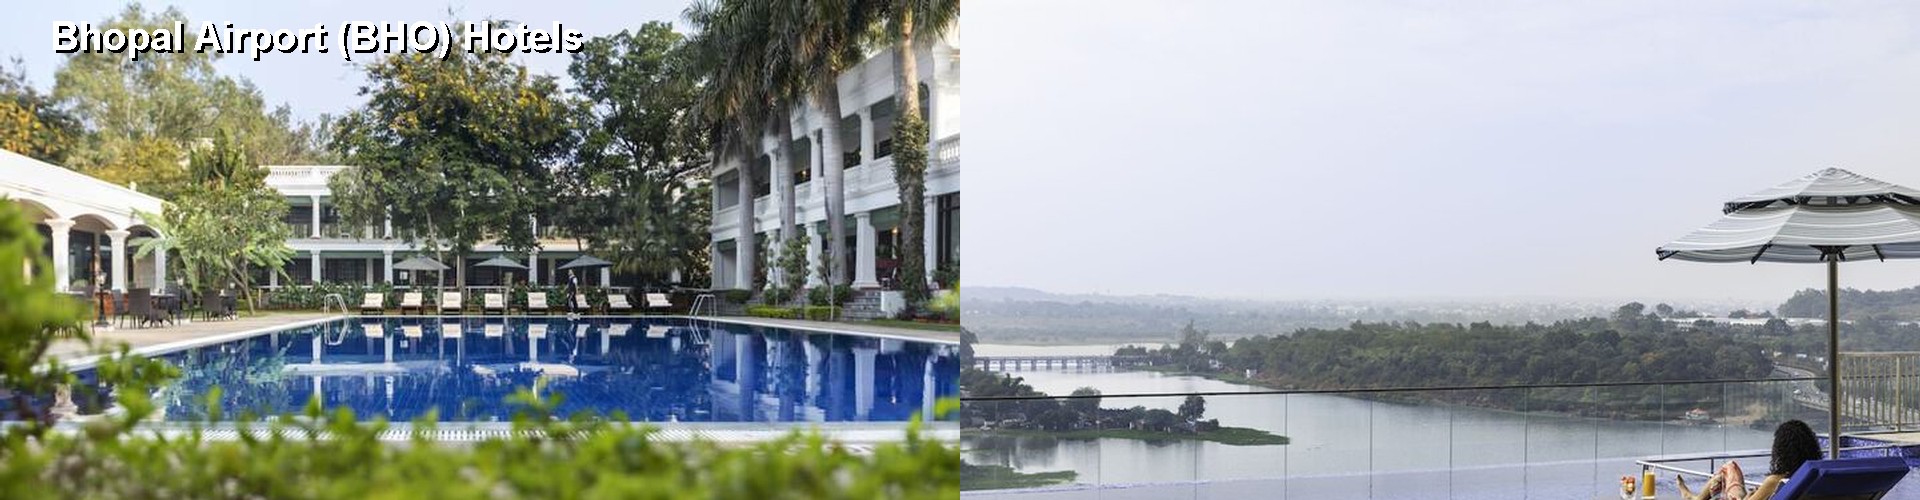 2 Best Hotels near Bhopal Airport (BHO)